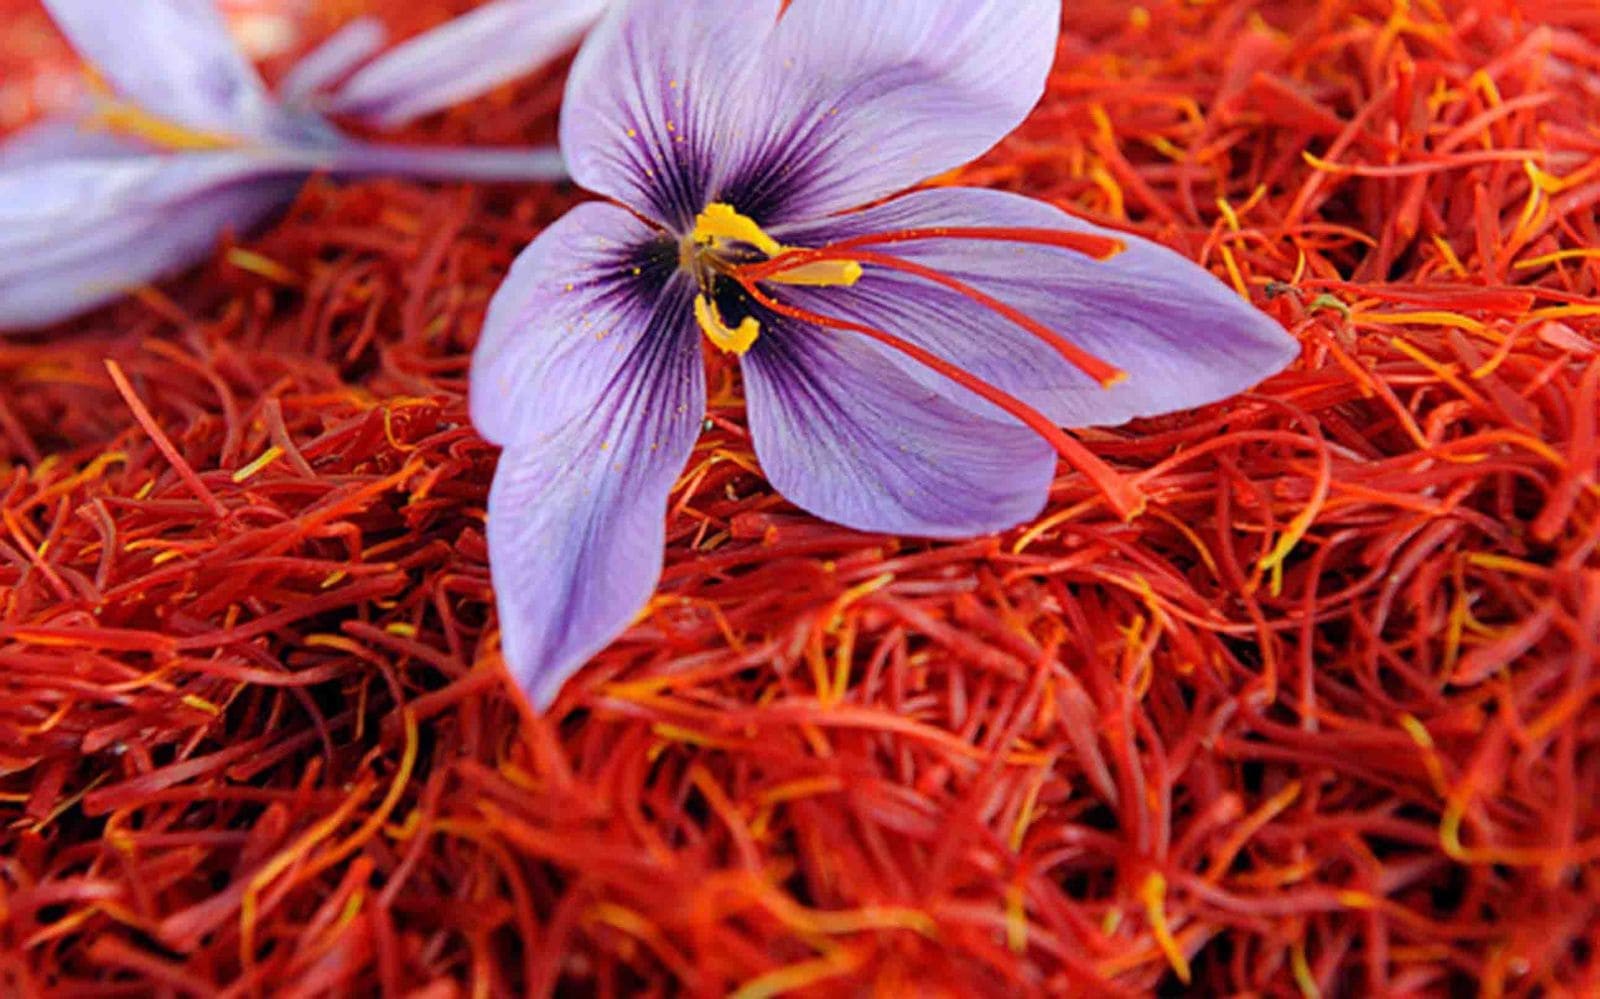 Introducing grades of saffron